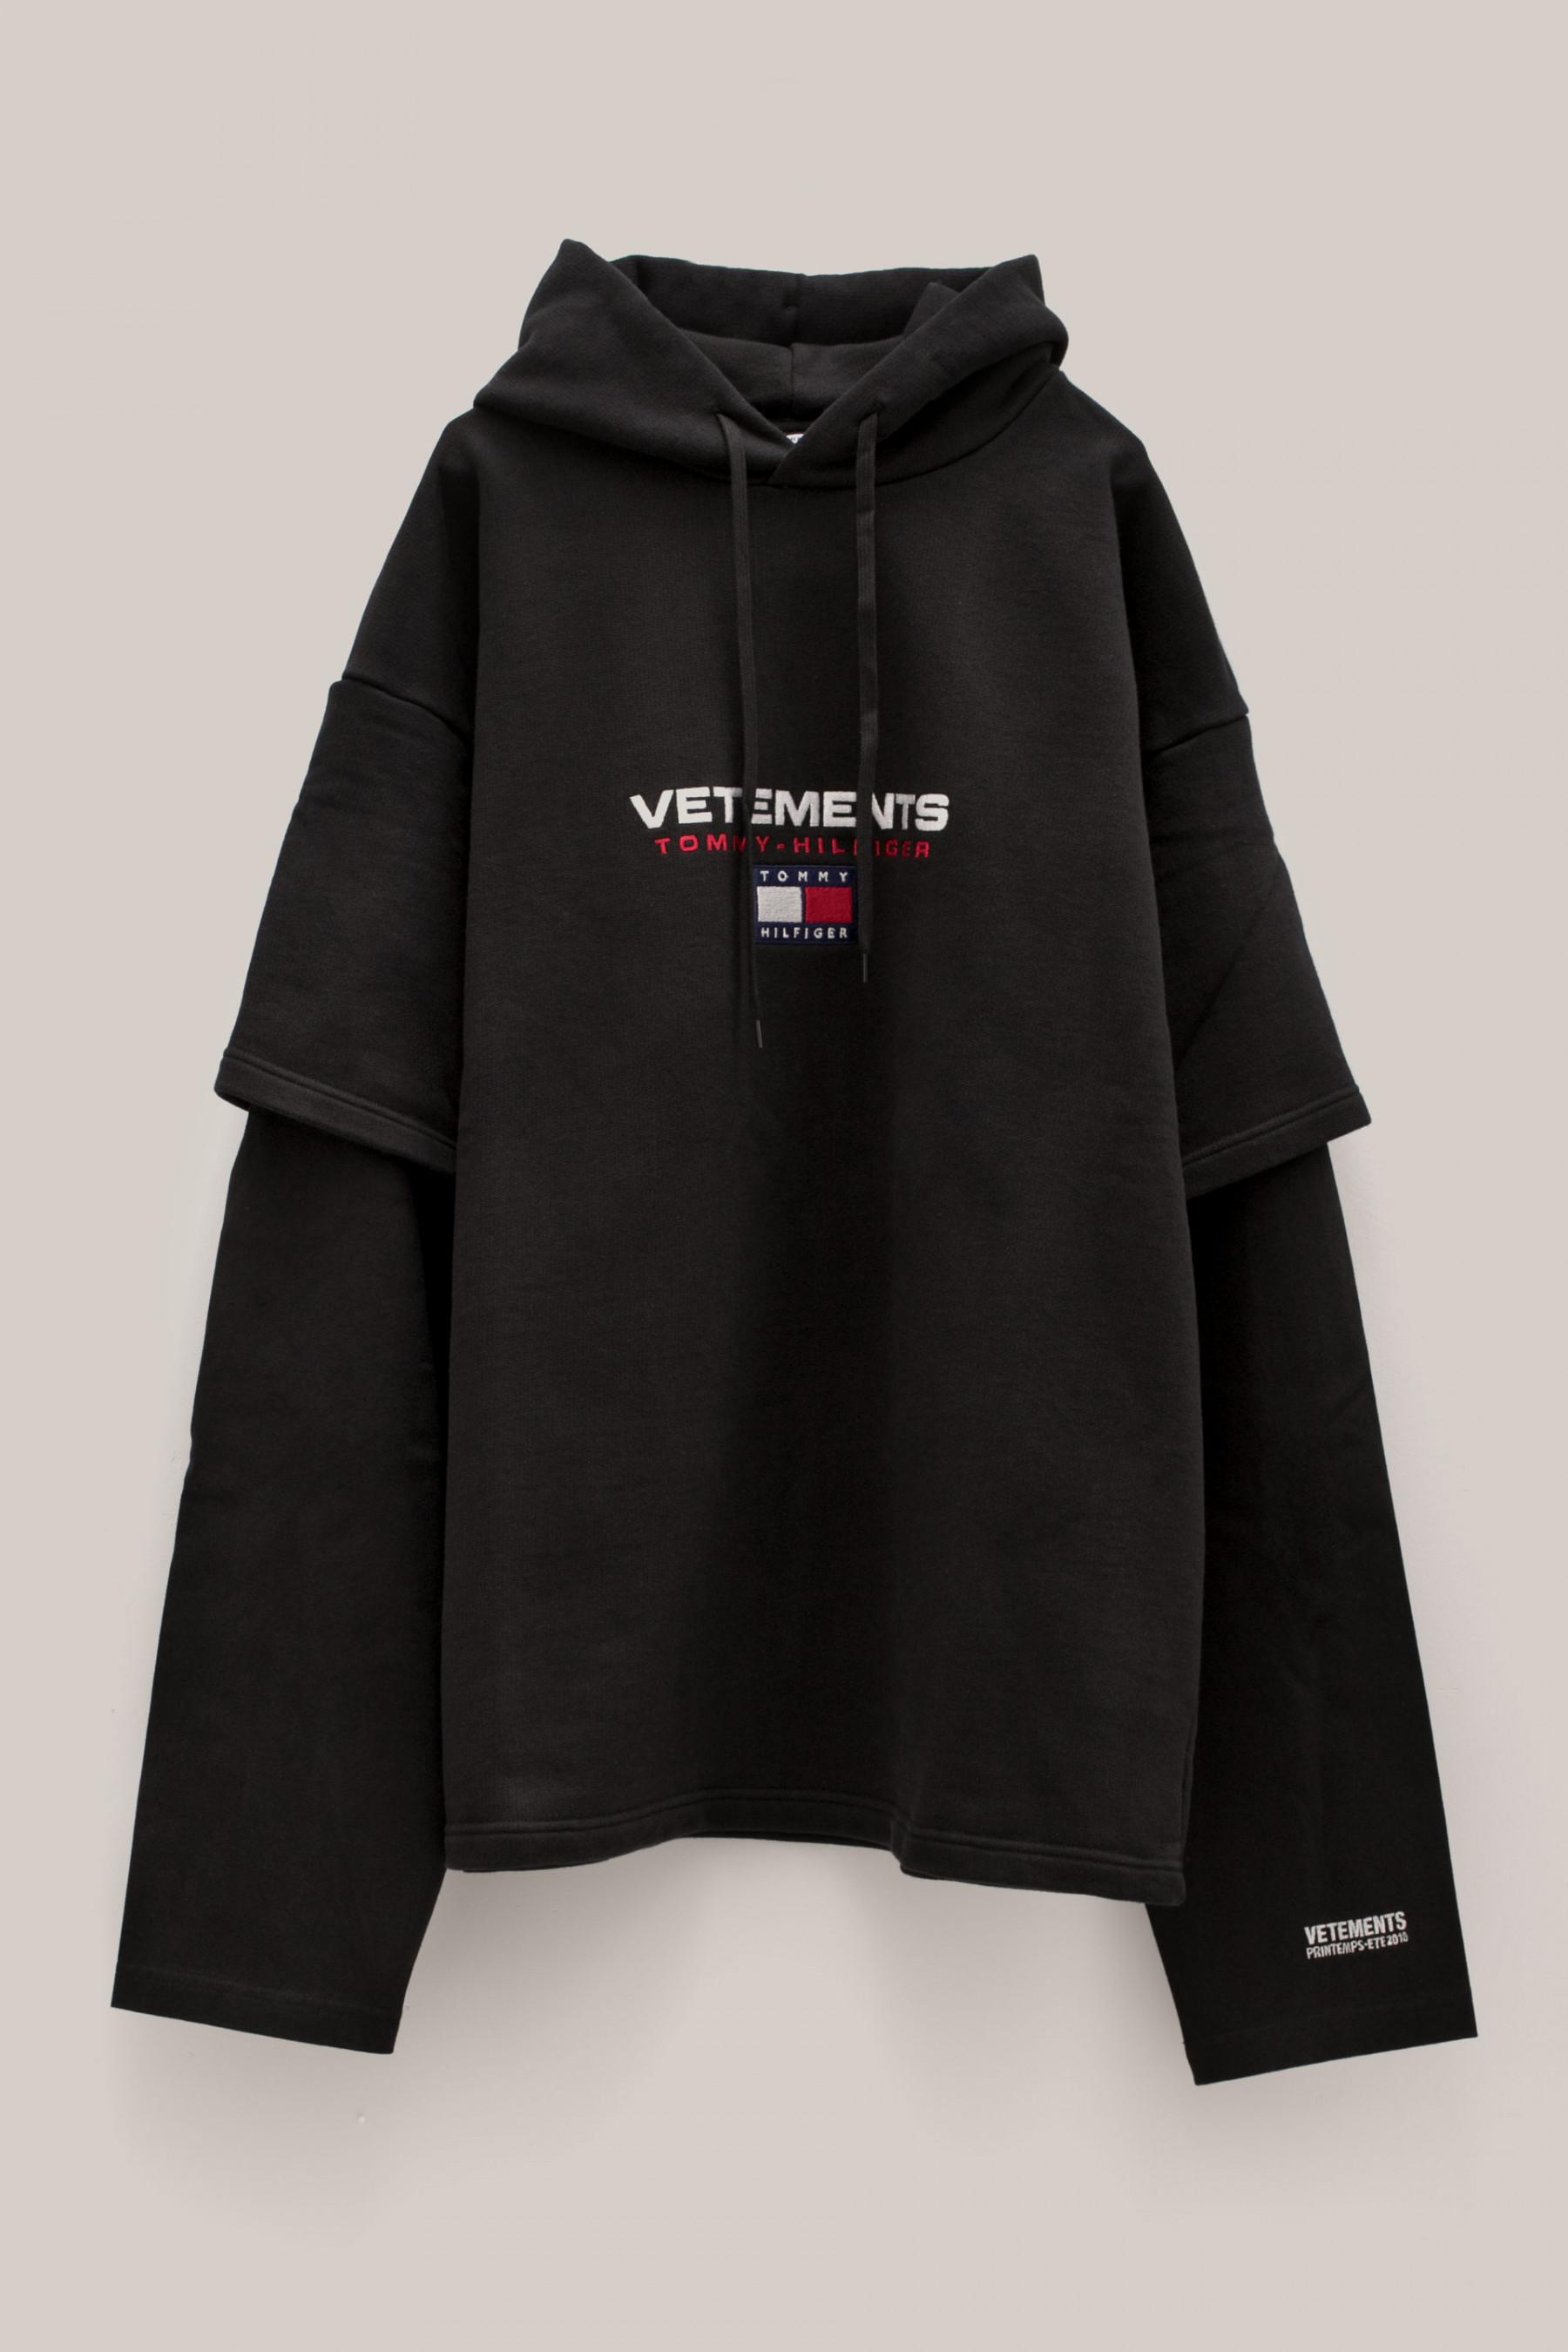 vetements x tommy hilfiger oversized hoodie